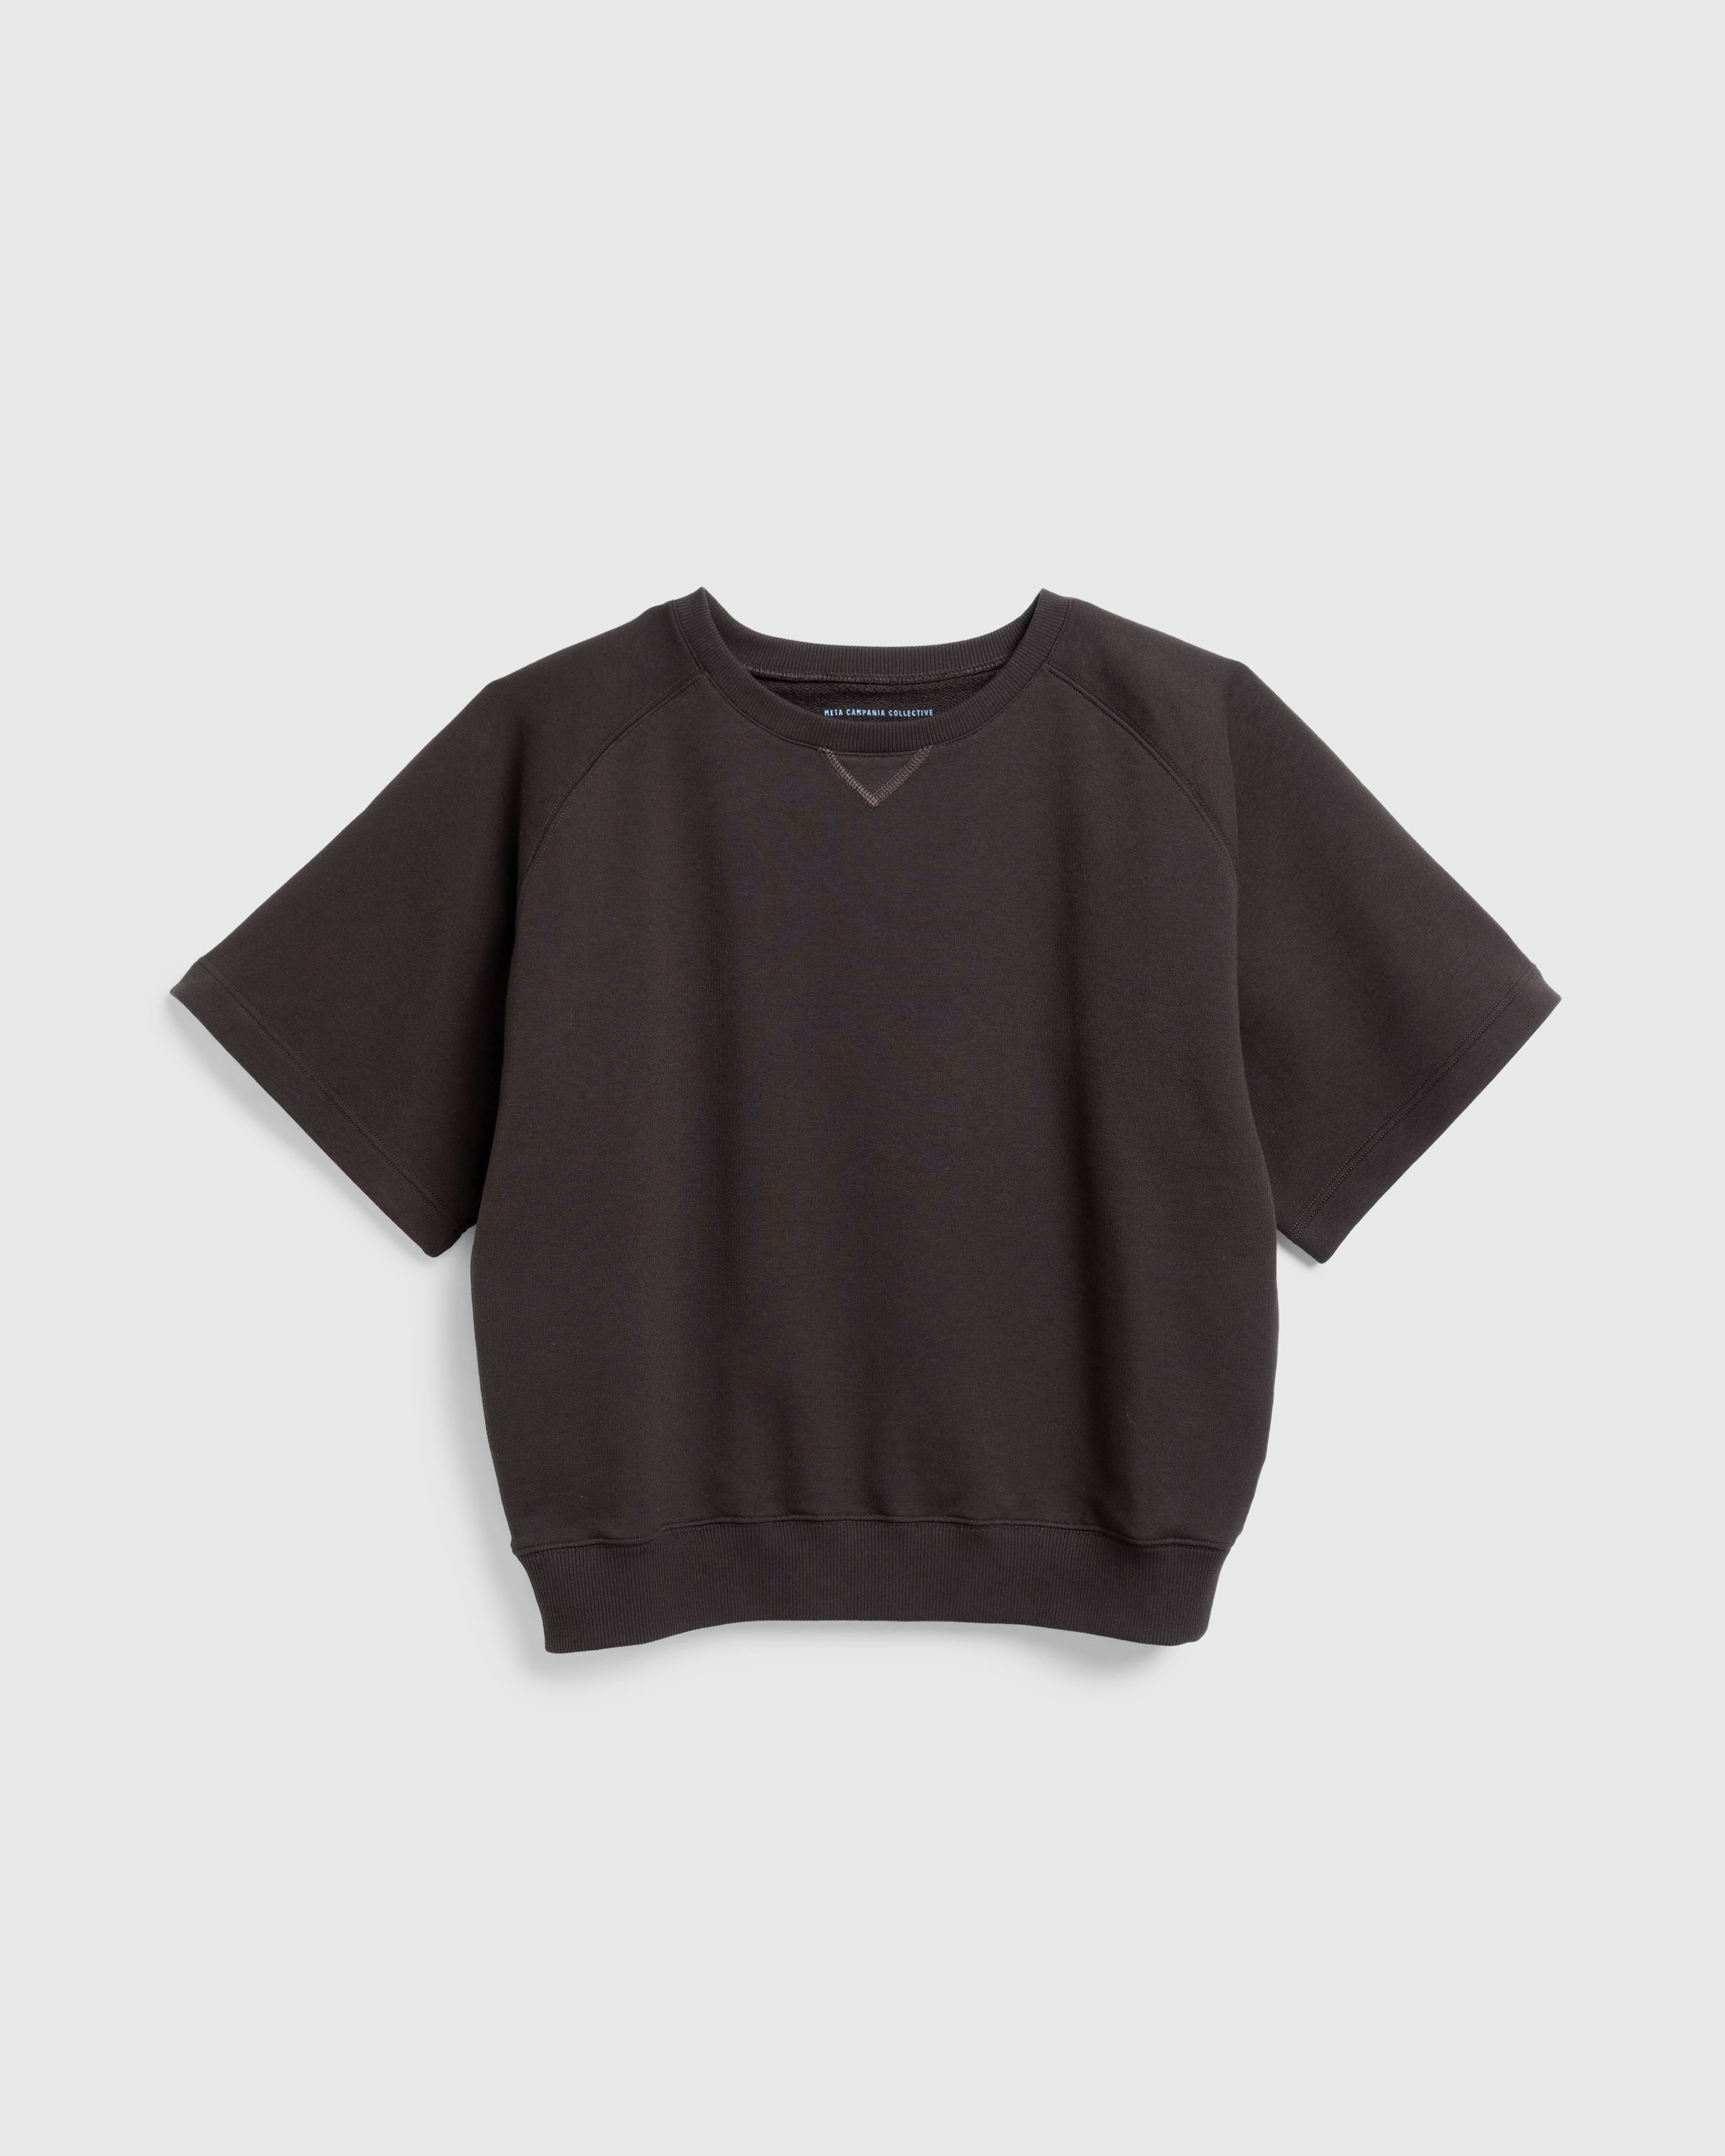 Meta Campania Collective - Sigmar Jersey Cotton Short Sleeve Crew Neck Dark Chocolate Brown - Clothing - Brown - Image 1